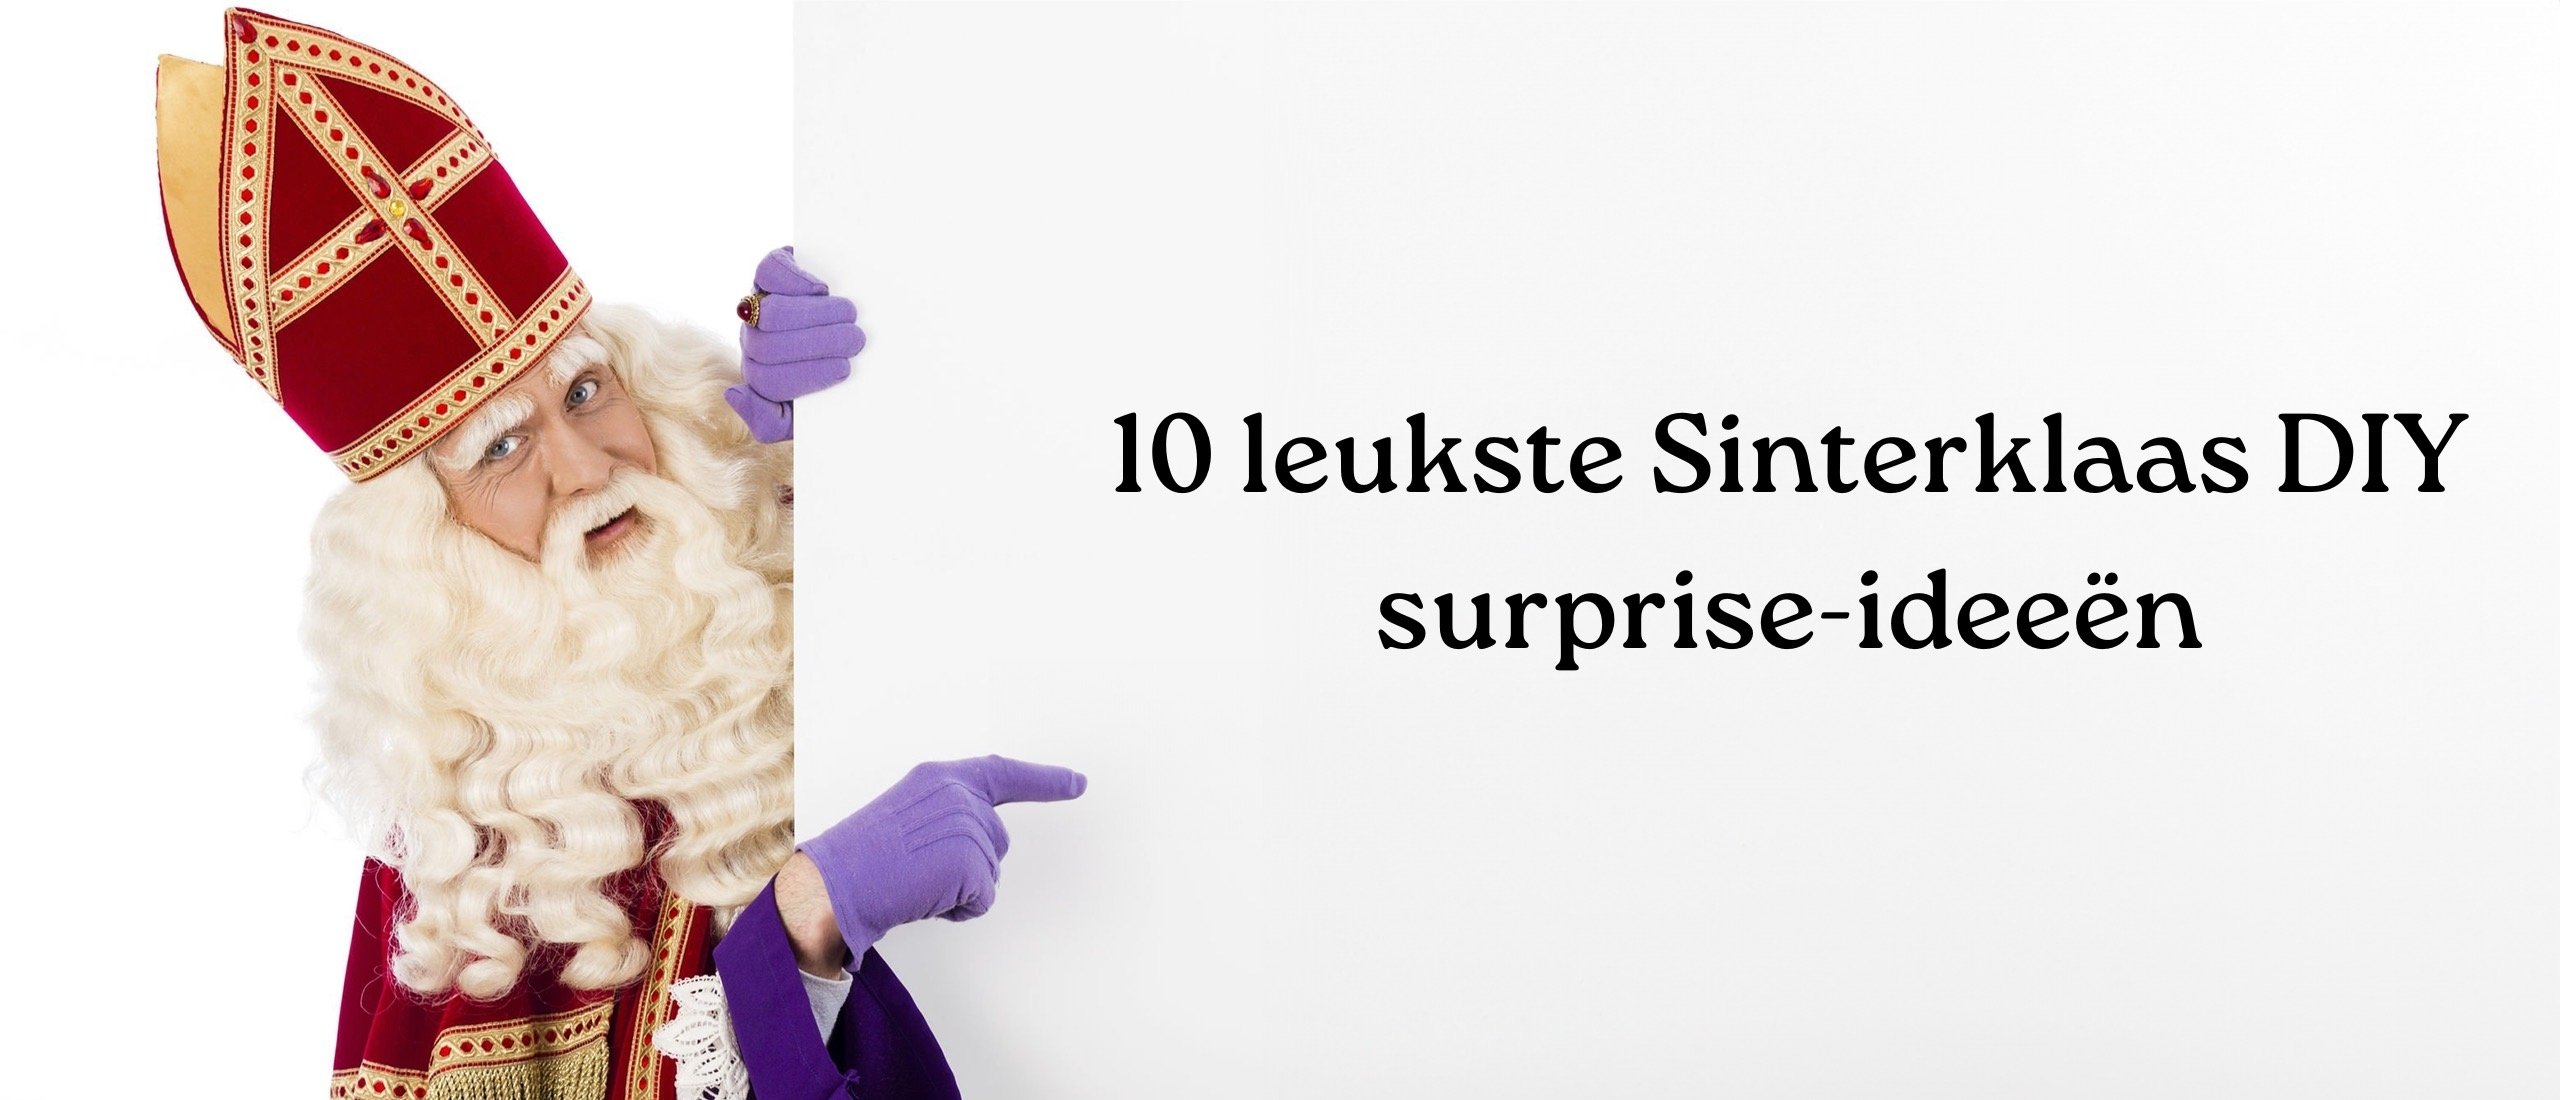 10 leukste Sinterklaas DIY surprise ideeën